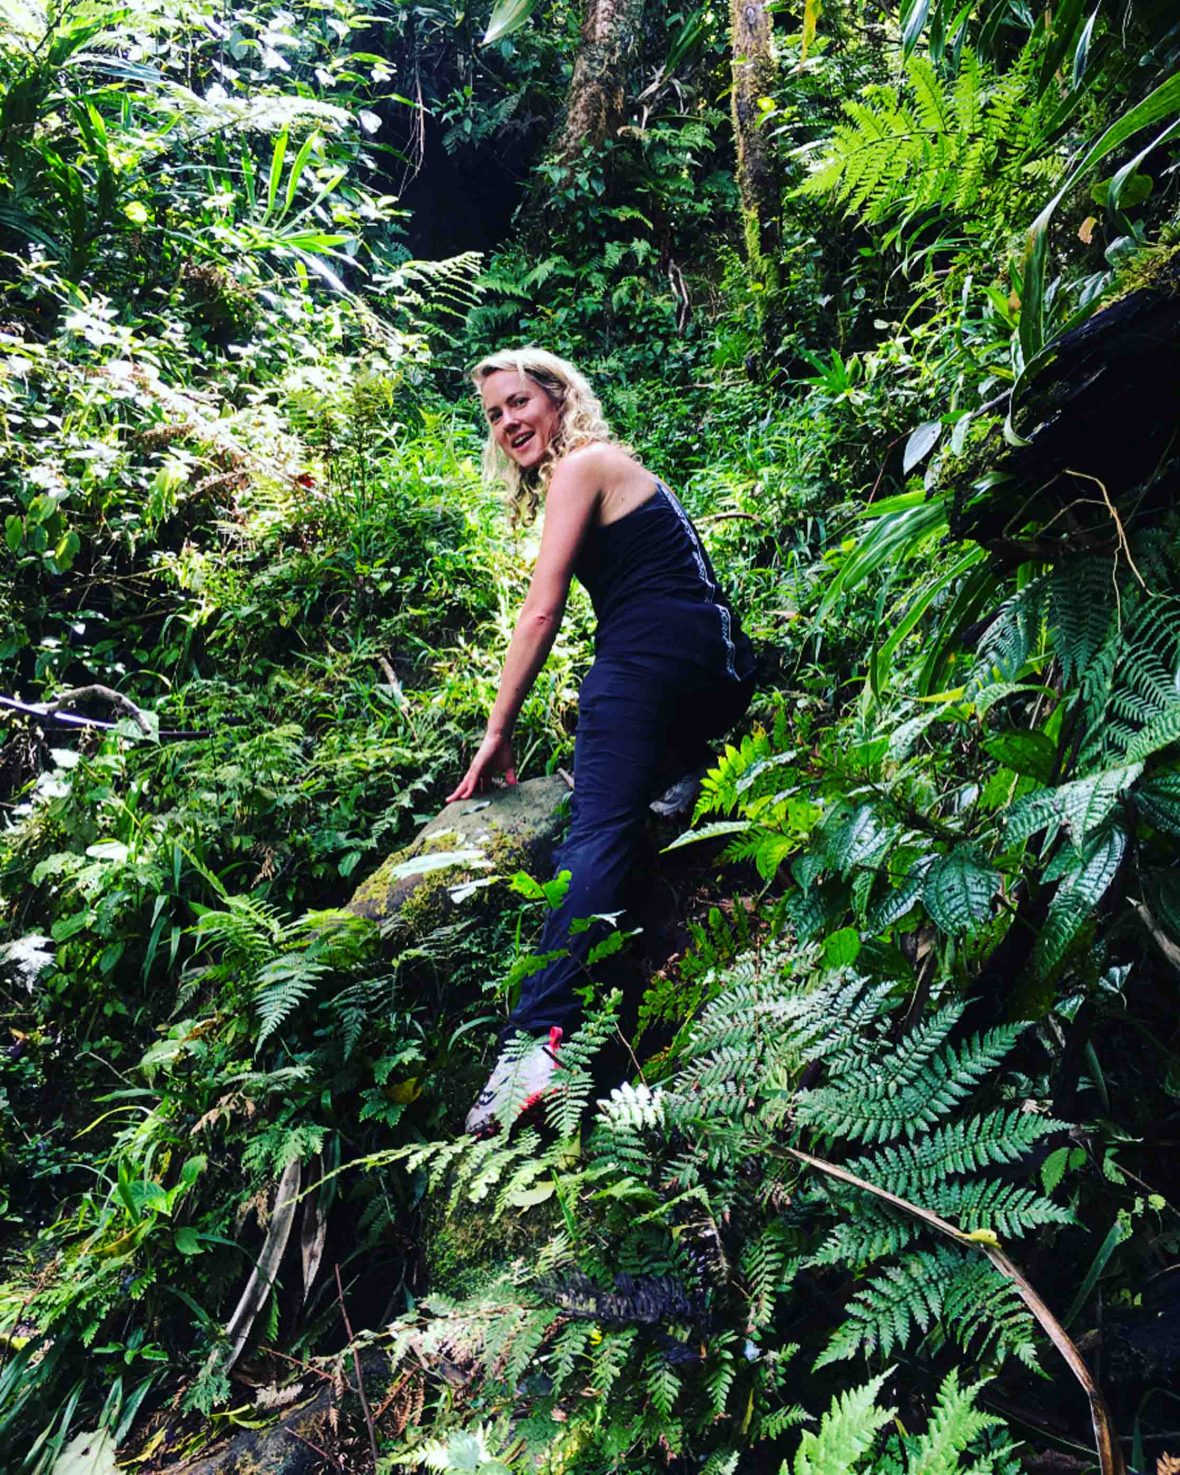 Sadie hiking through rich green forest in Fiji.